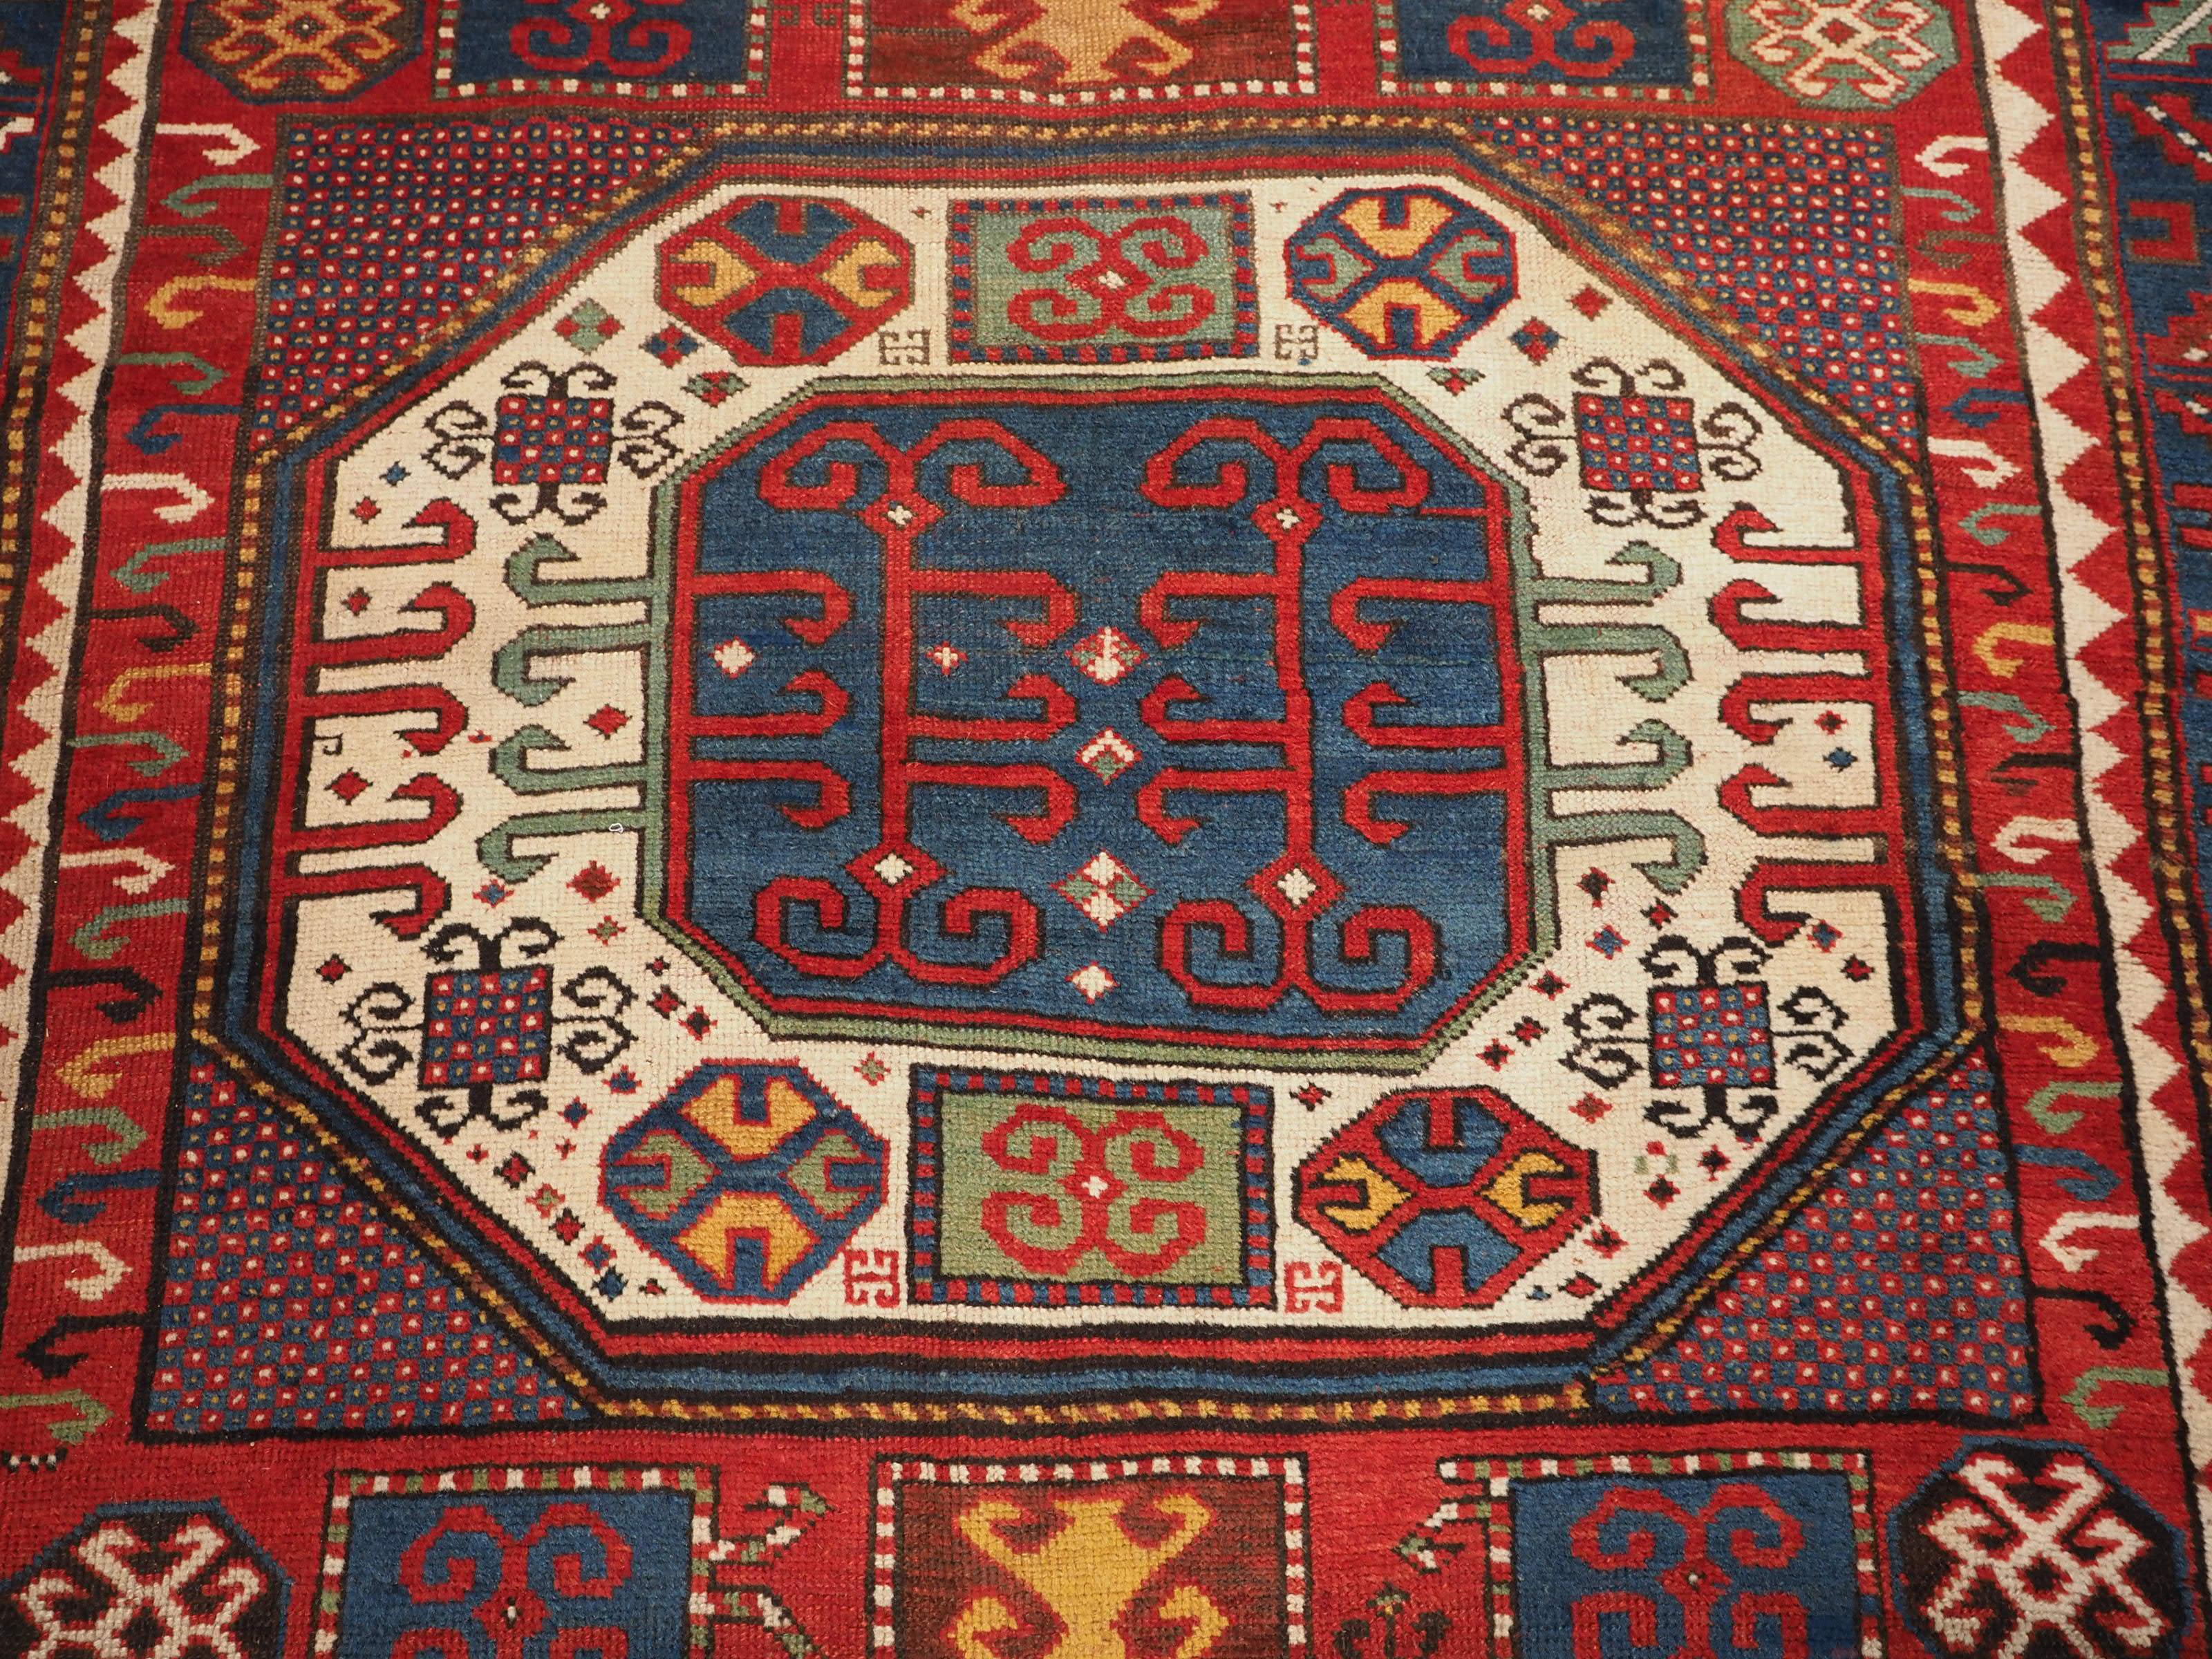 Antique Caucasian Karachov Kazak Rug of Classic Design on a Red Ground For Sale 1